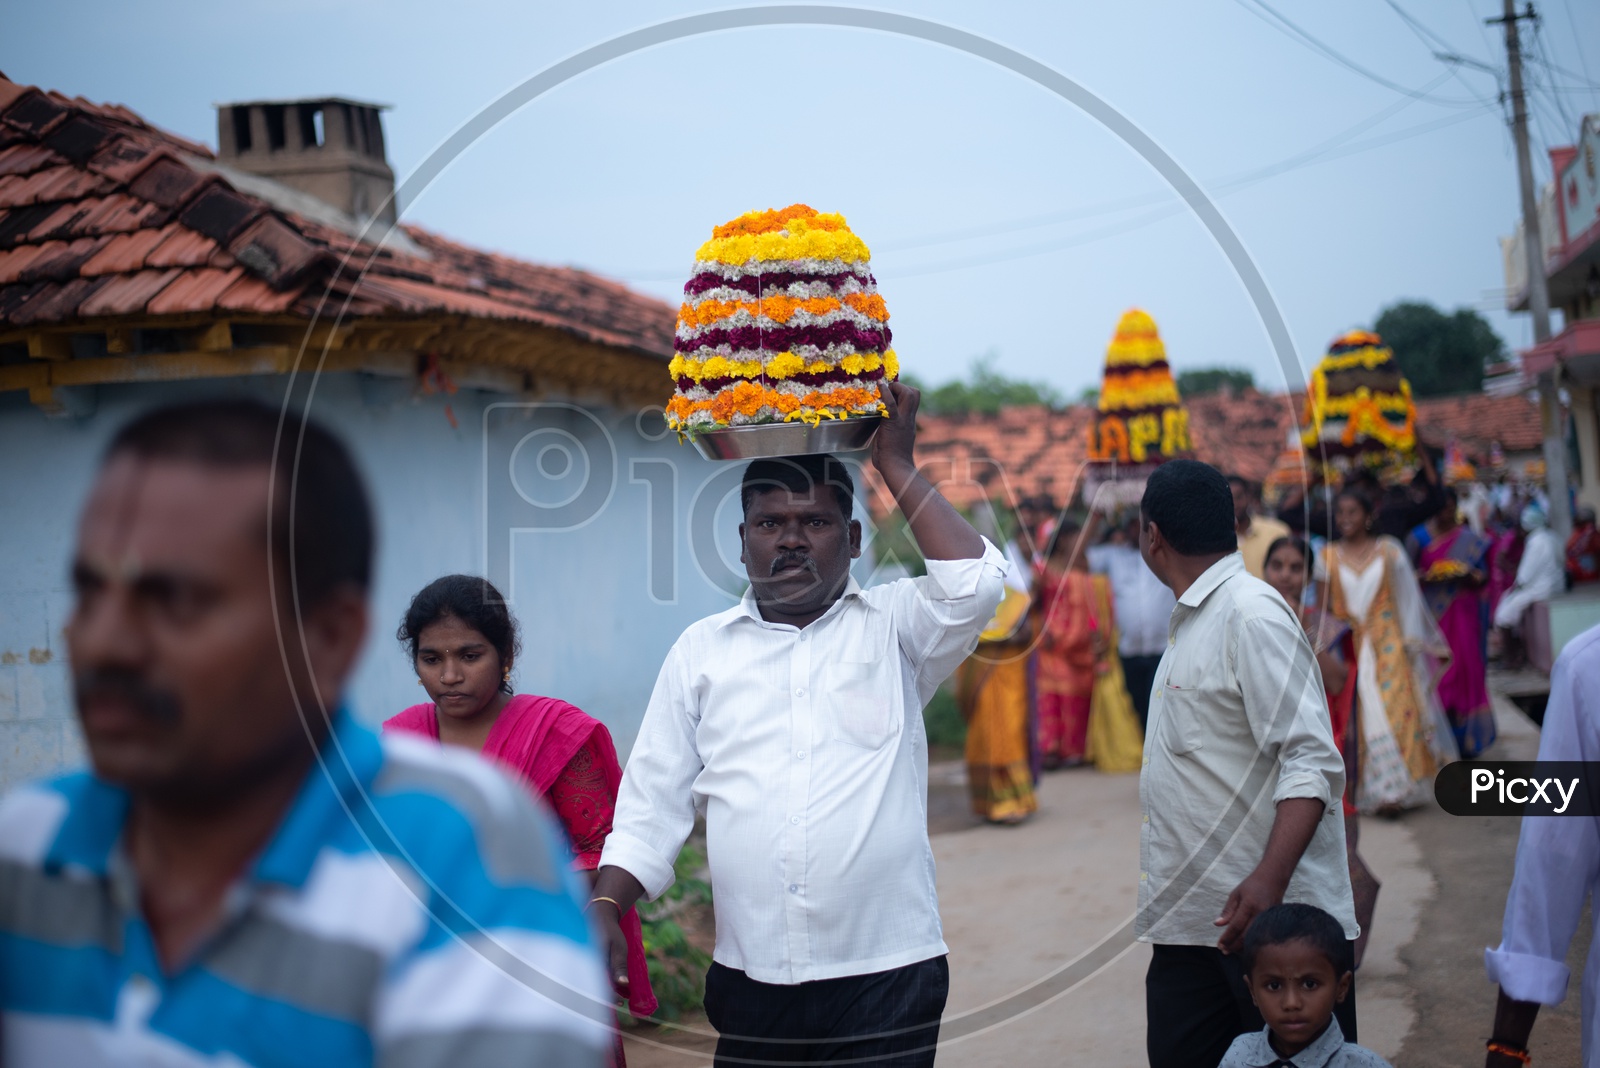 Men carry Bathukamma, a floral decoration  on Saddula bathukamma (pedda bathukamma) day in Telangana.